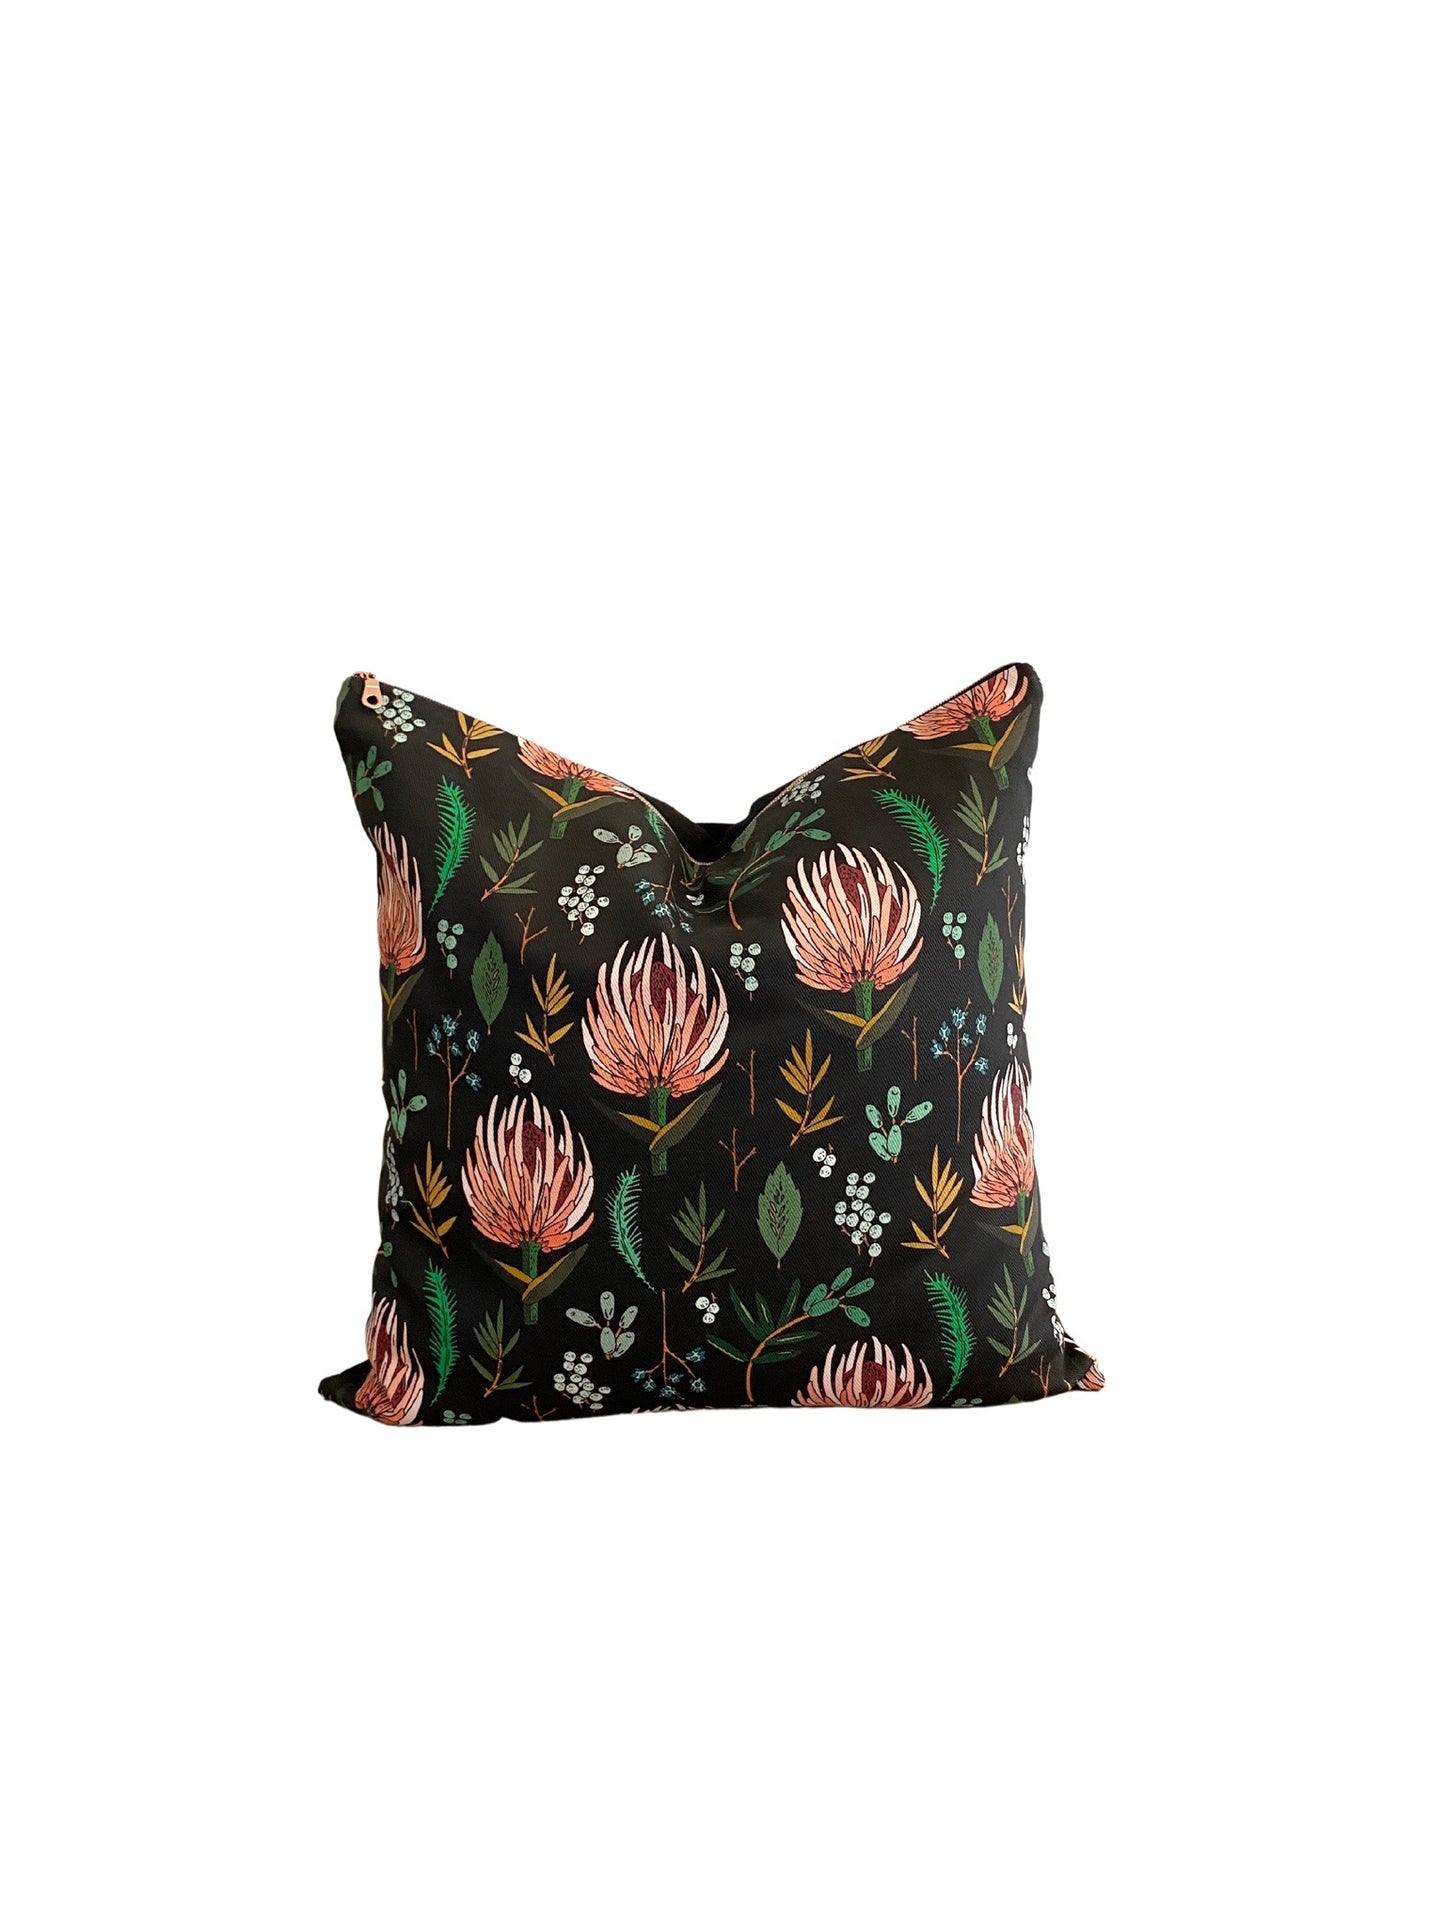 Protea Noir Pillow Cover - Designed by Holli Zollinger